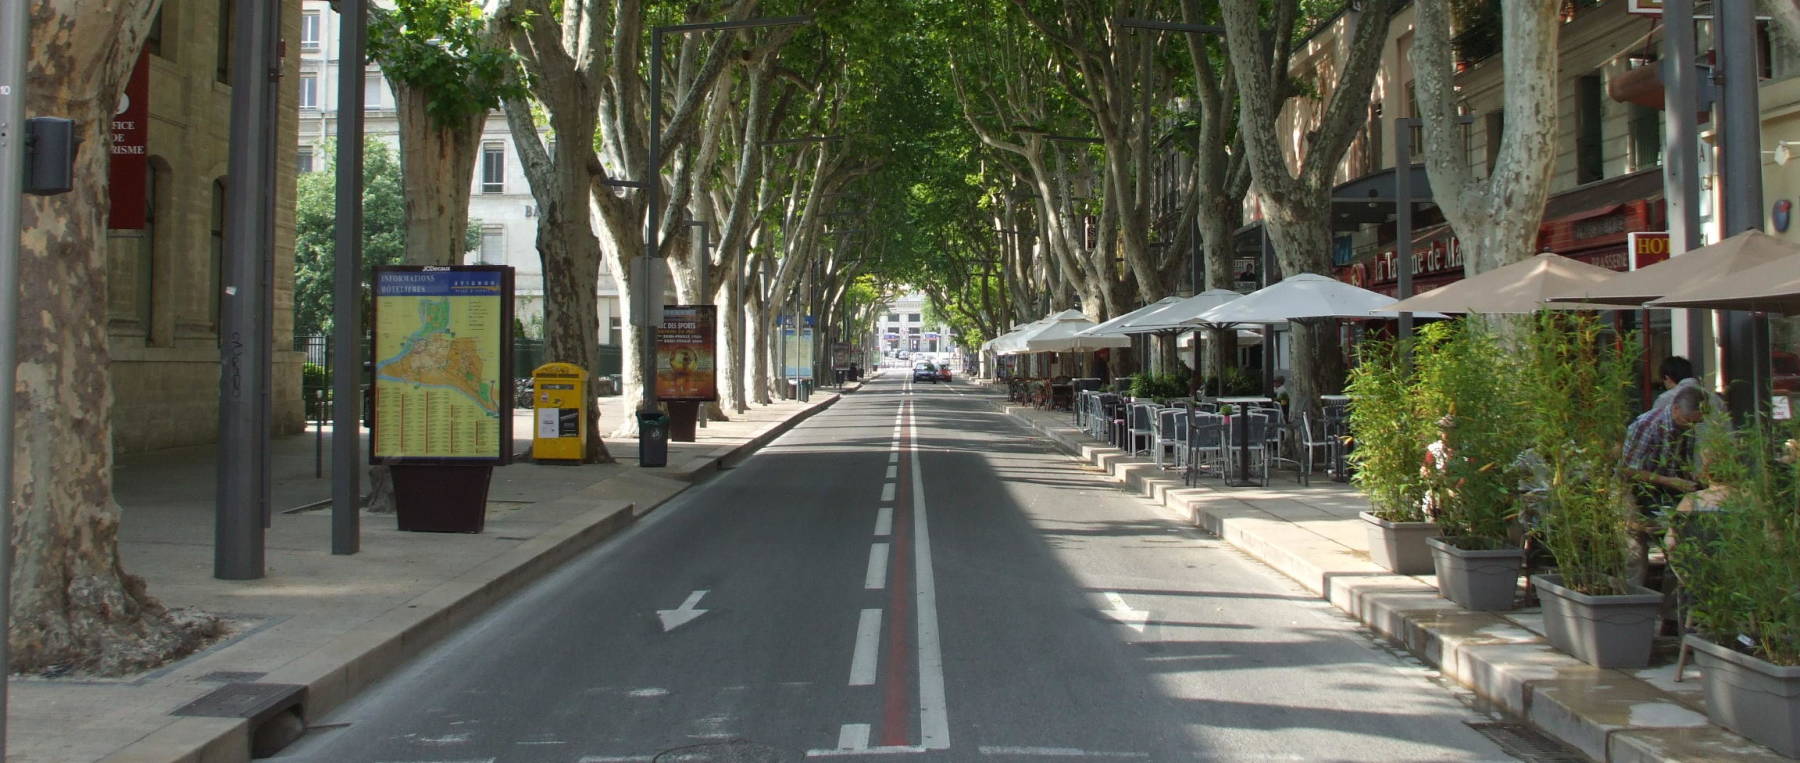 Plane trees lining a street in Aix-en-Provence.